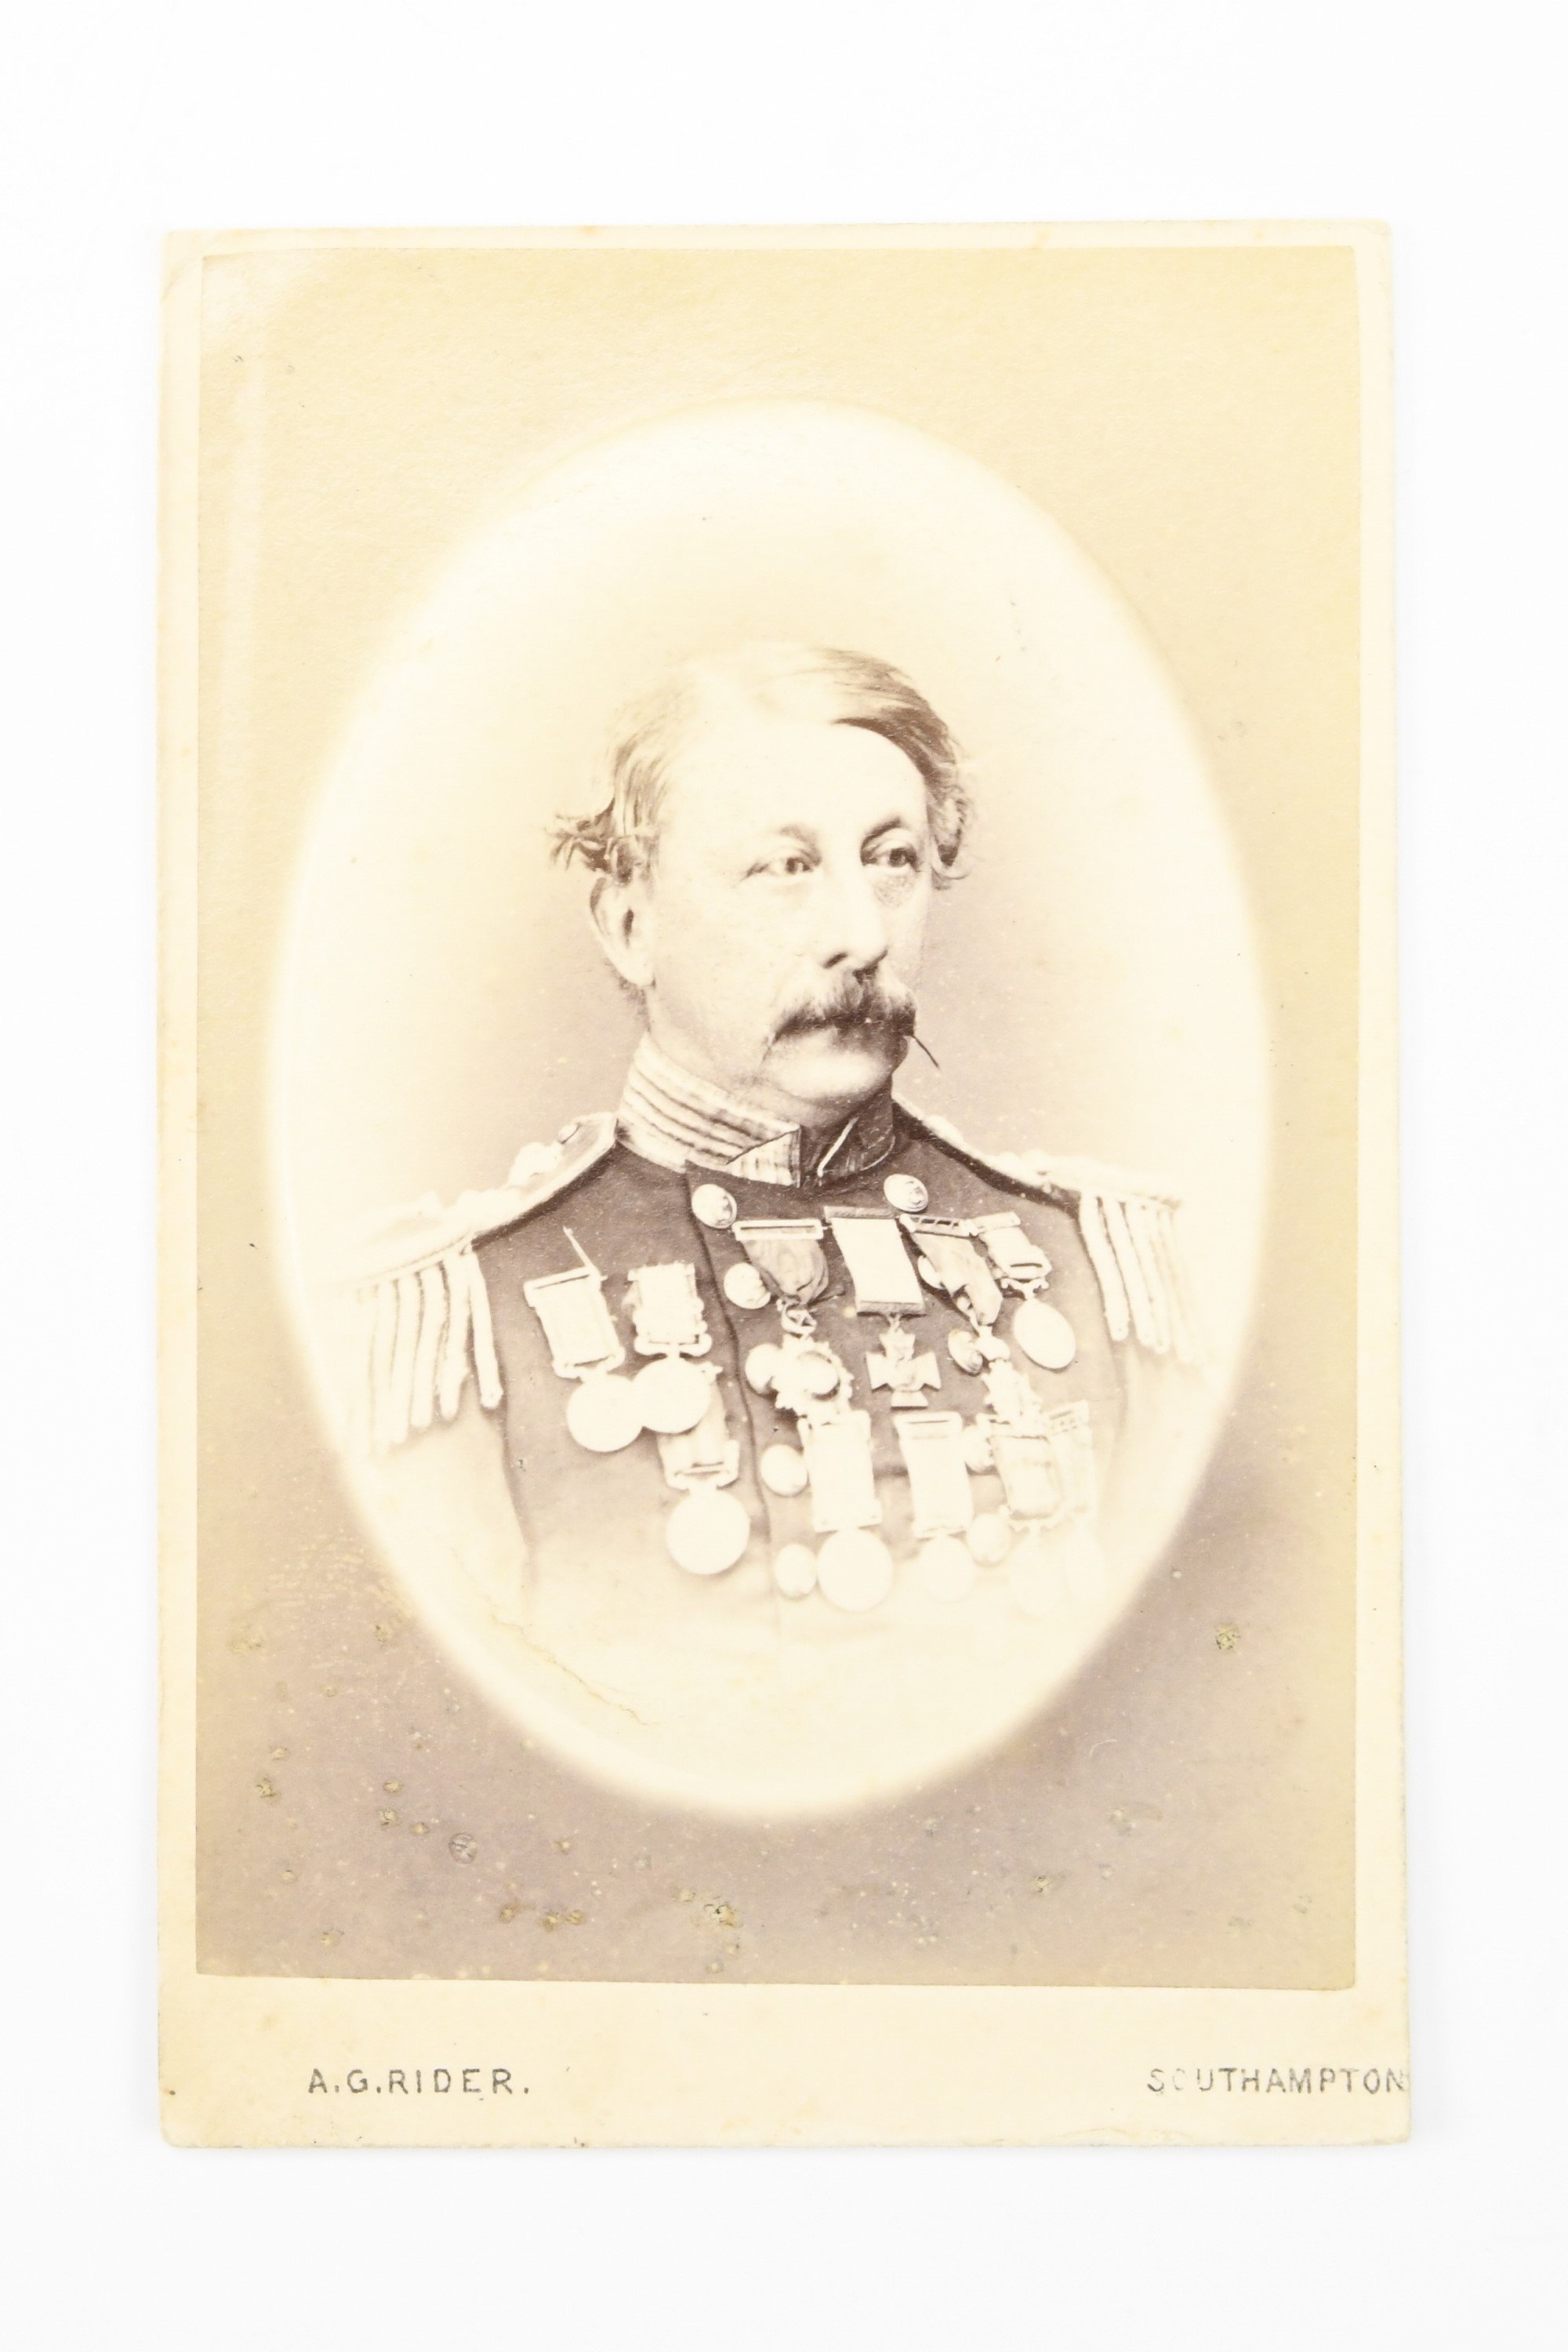 [ Victoria Cross ] A carte de visite portraying Lieutenant George Day bearing autograph signature